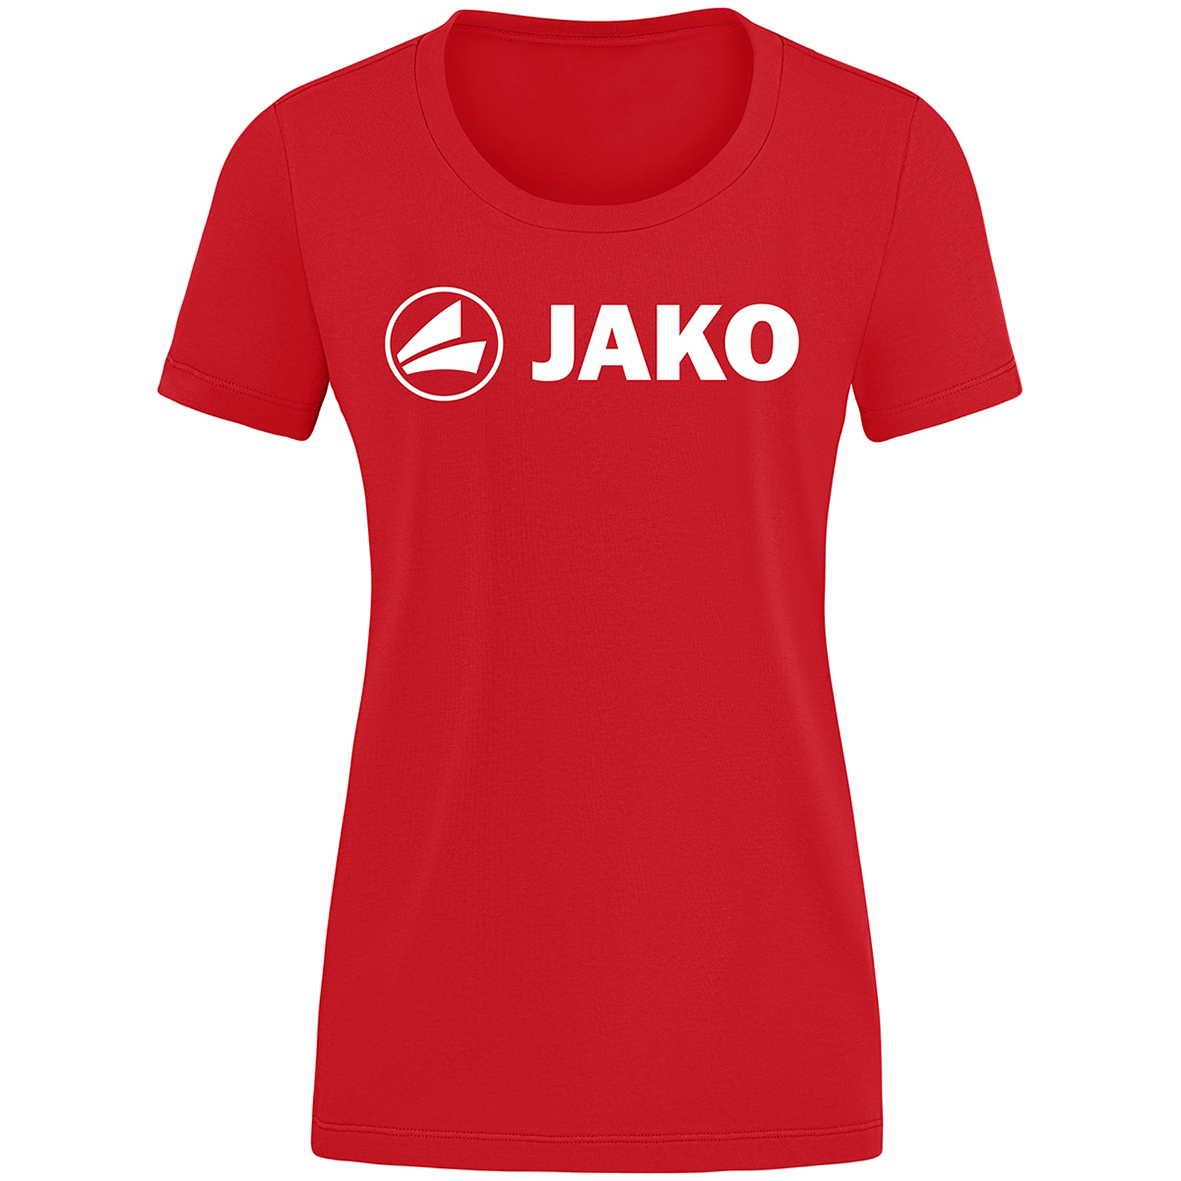 T-SHIRT JAKO PROMO, RED WOMEN.